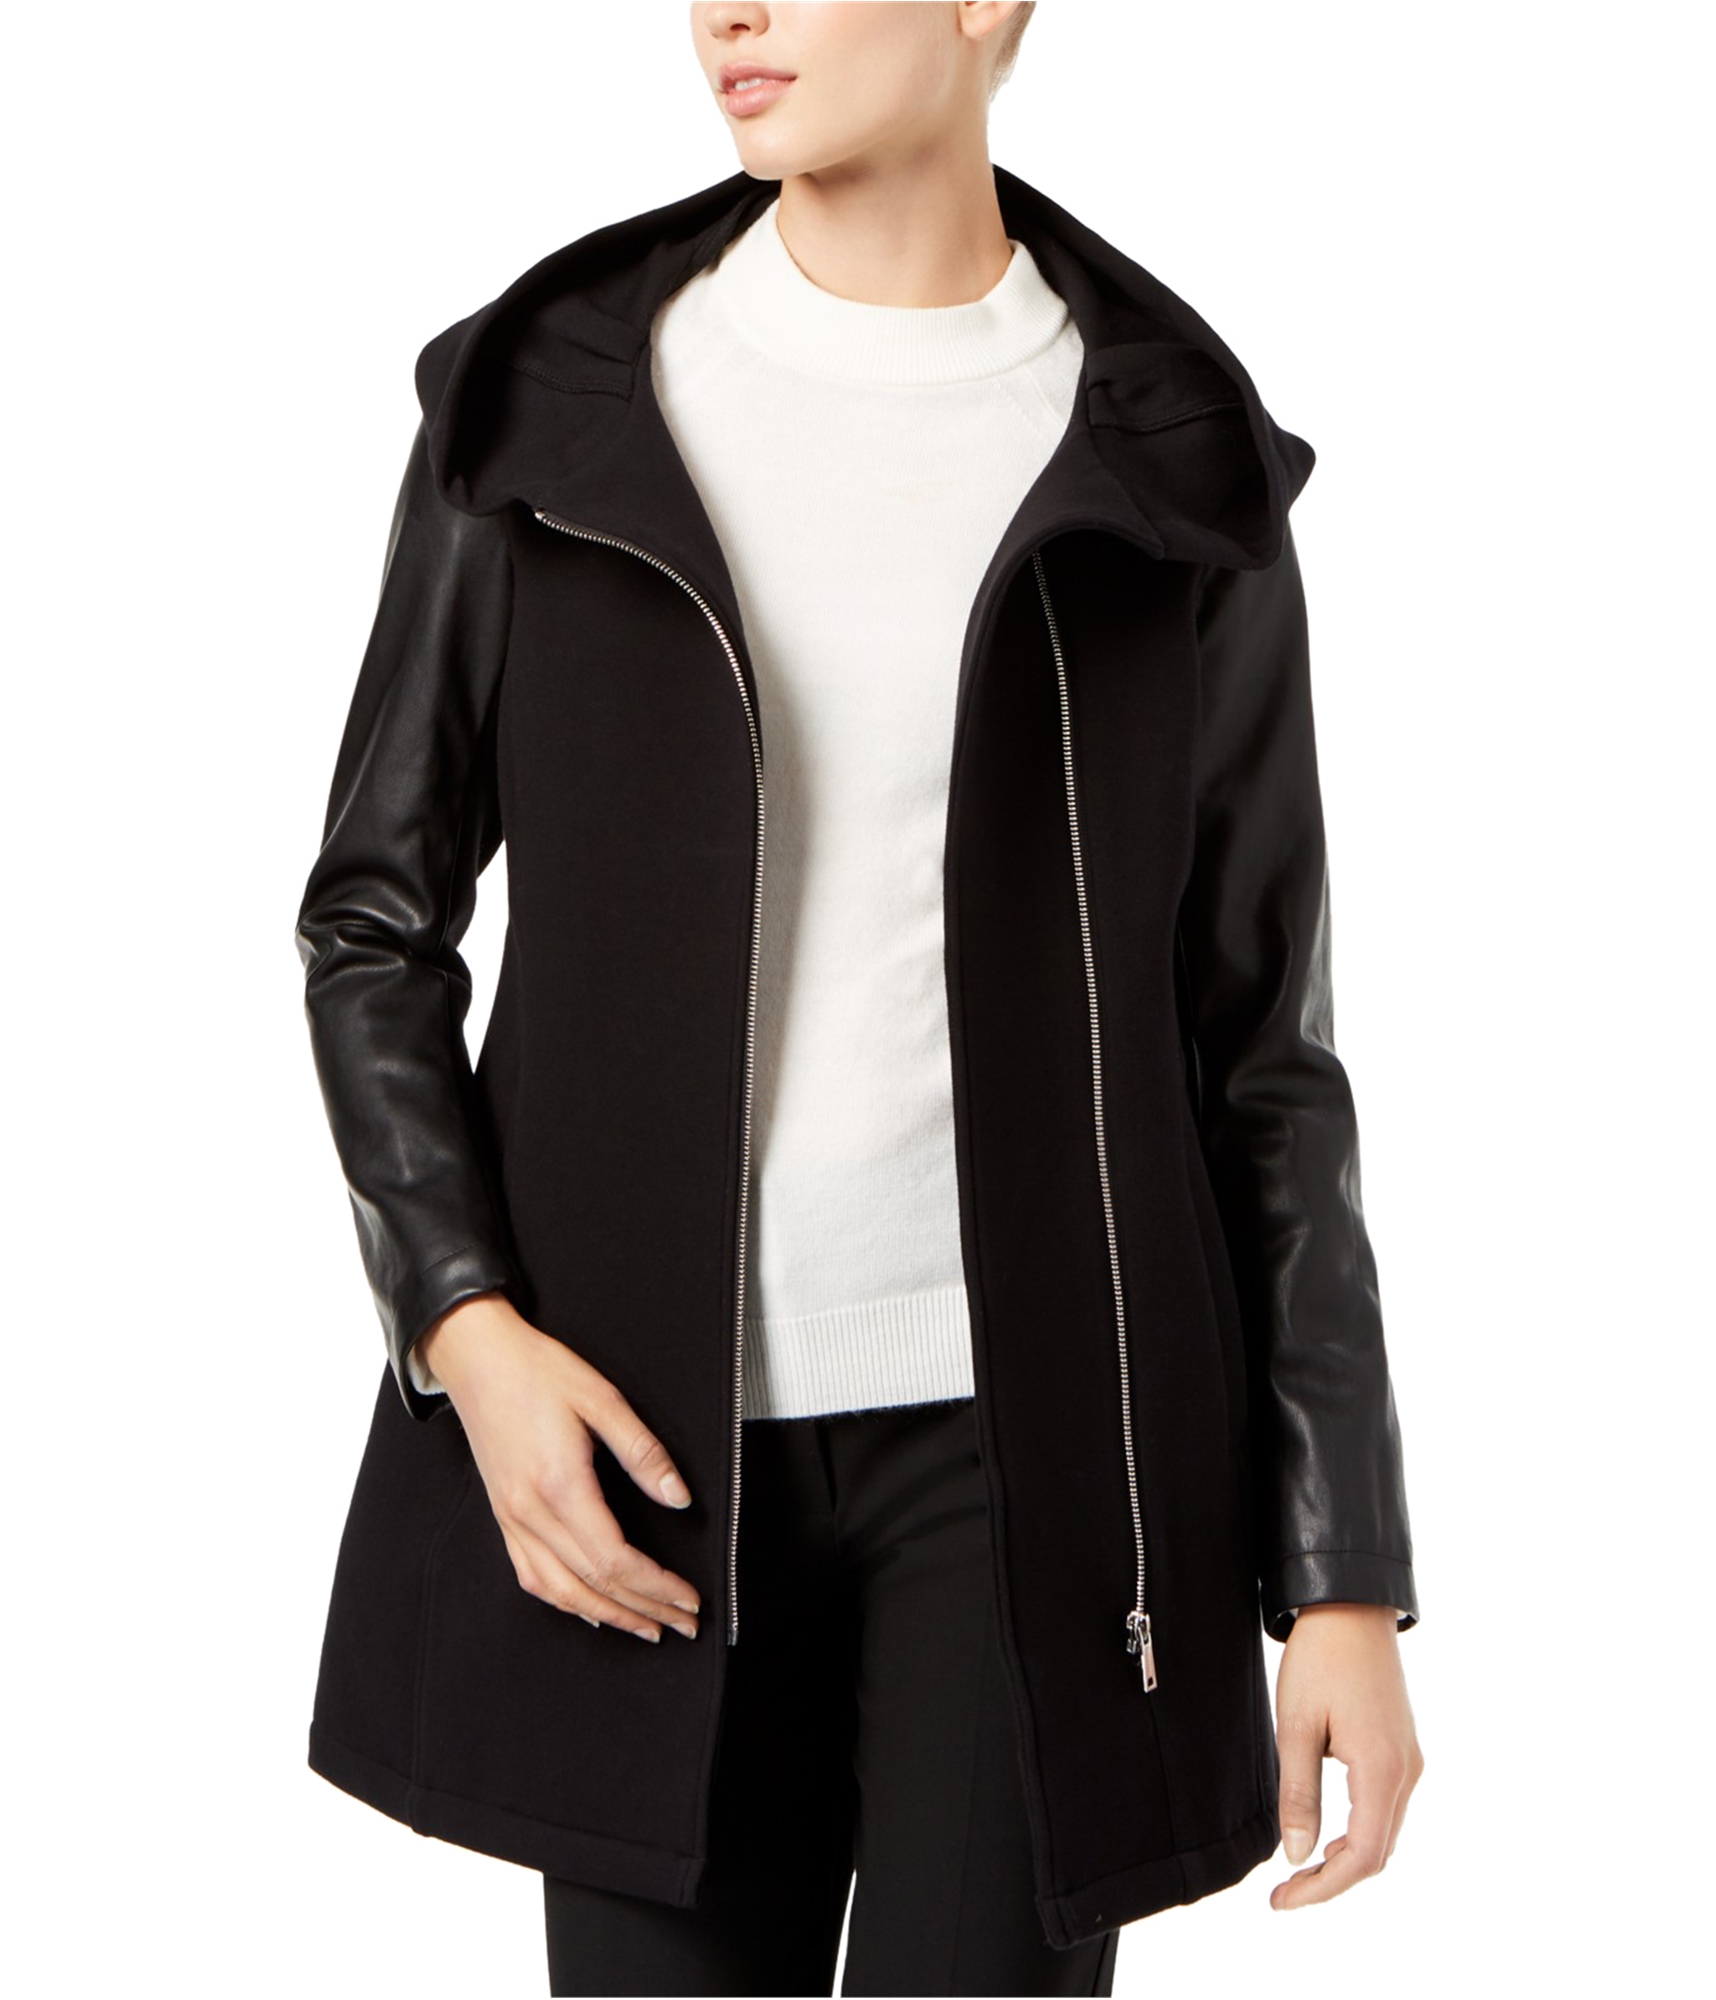 Calvin Klein Womens Hooded Jacket, Black, Medium | eBay